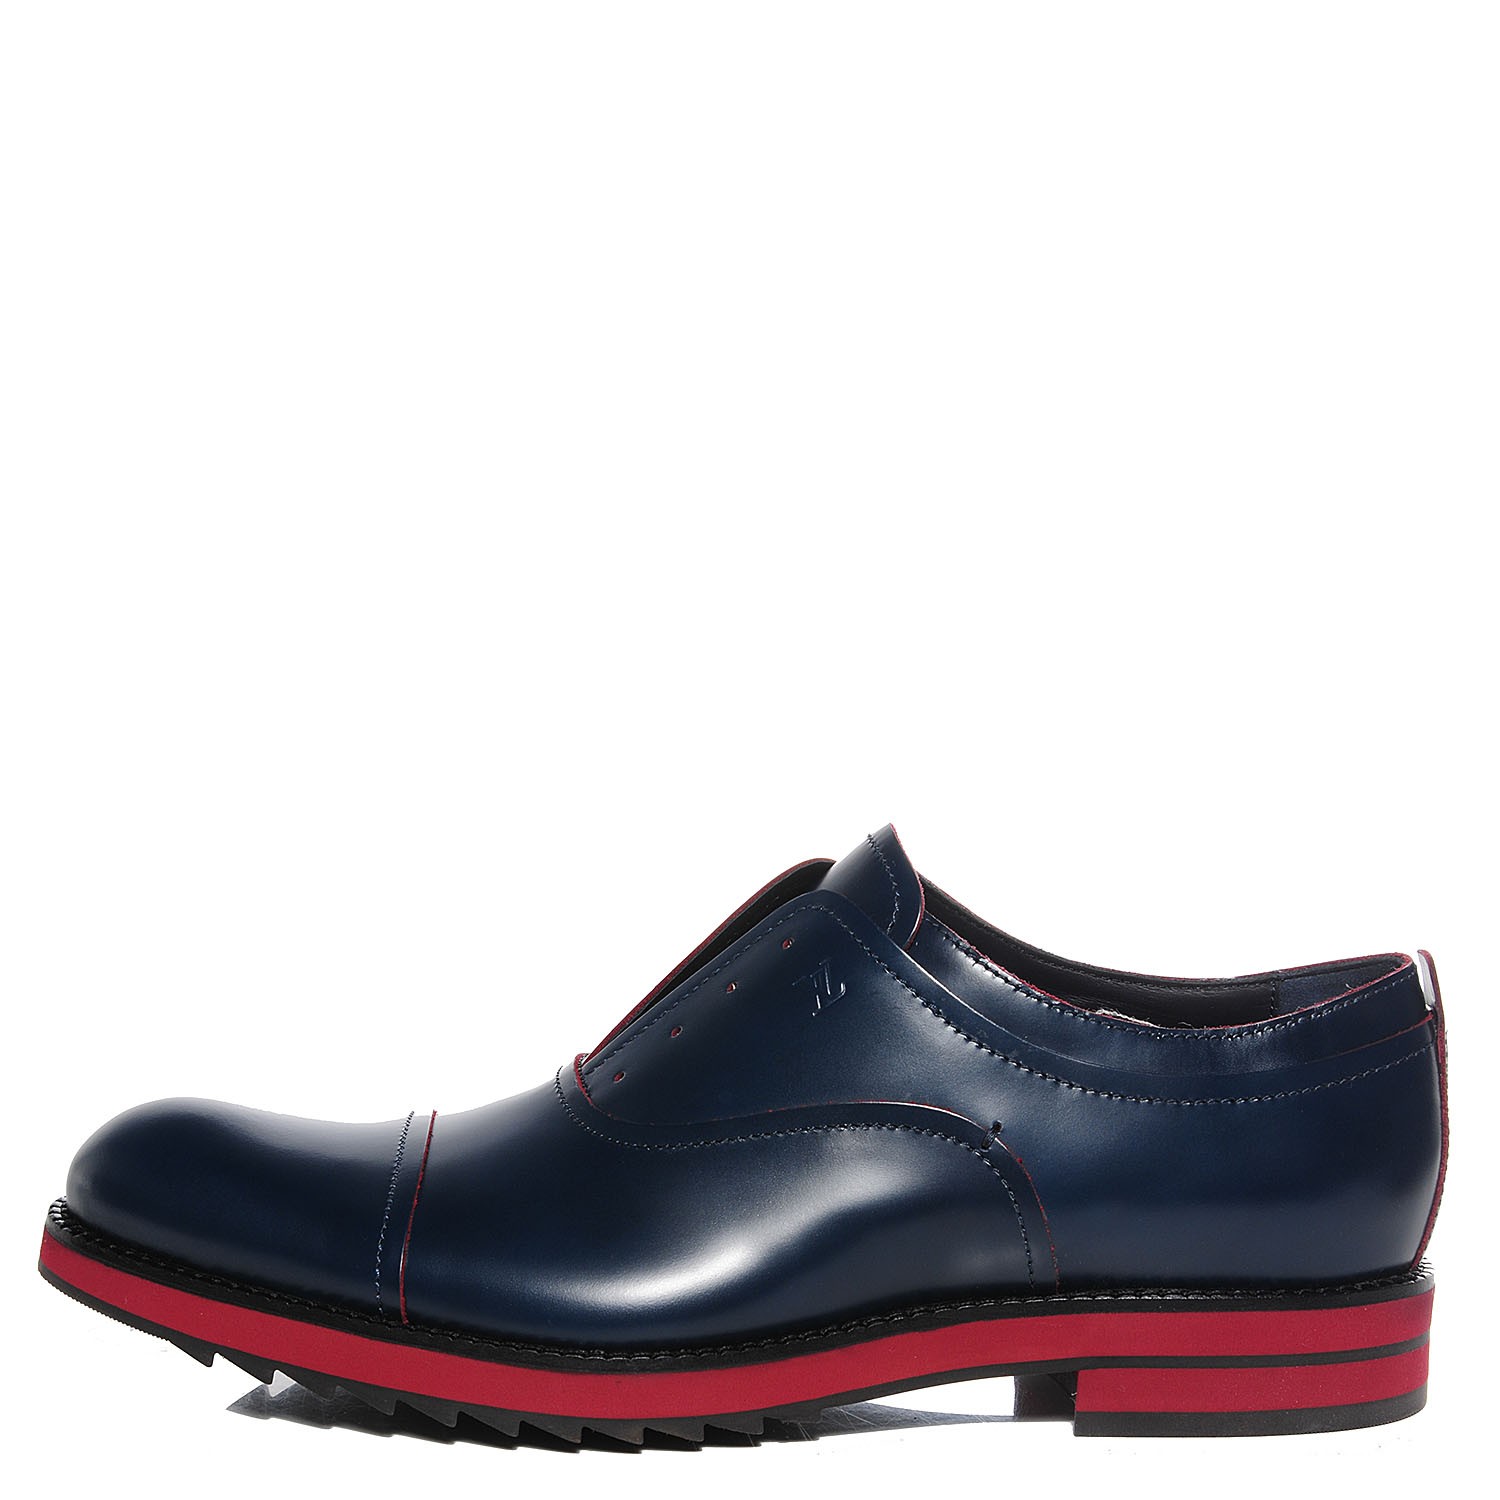 Manhattan Richelieu Shoes by Louis Vuitton  Louis vuitton men shoes,  Expensive mens shoes, Most expensive shoes